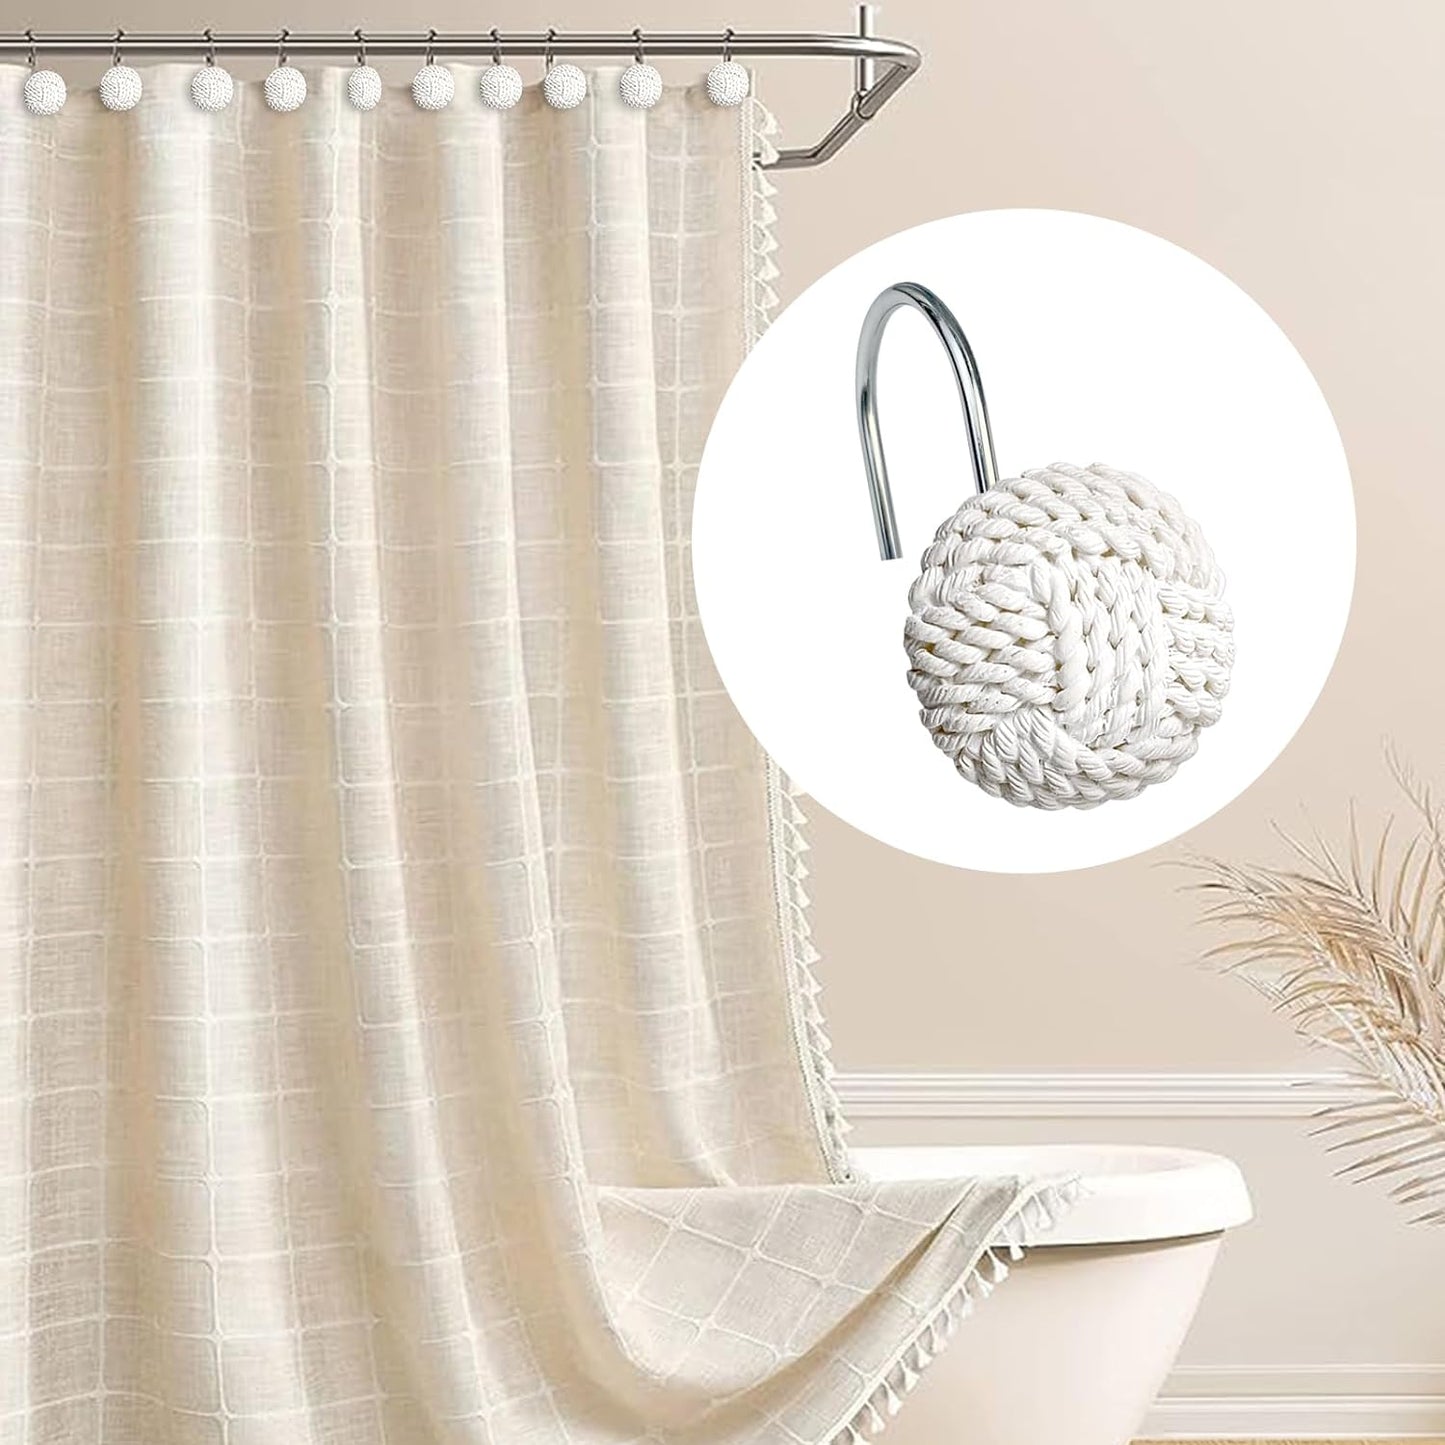 Sunlit Boho Knots Shower Curtain Hooks, Home Decorative Shower Curtain Rings for Bathroom, Seaside Nautical Shower Curtain Hangers Bathroom Accessories, Set of 12